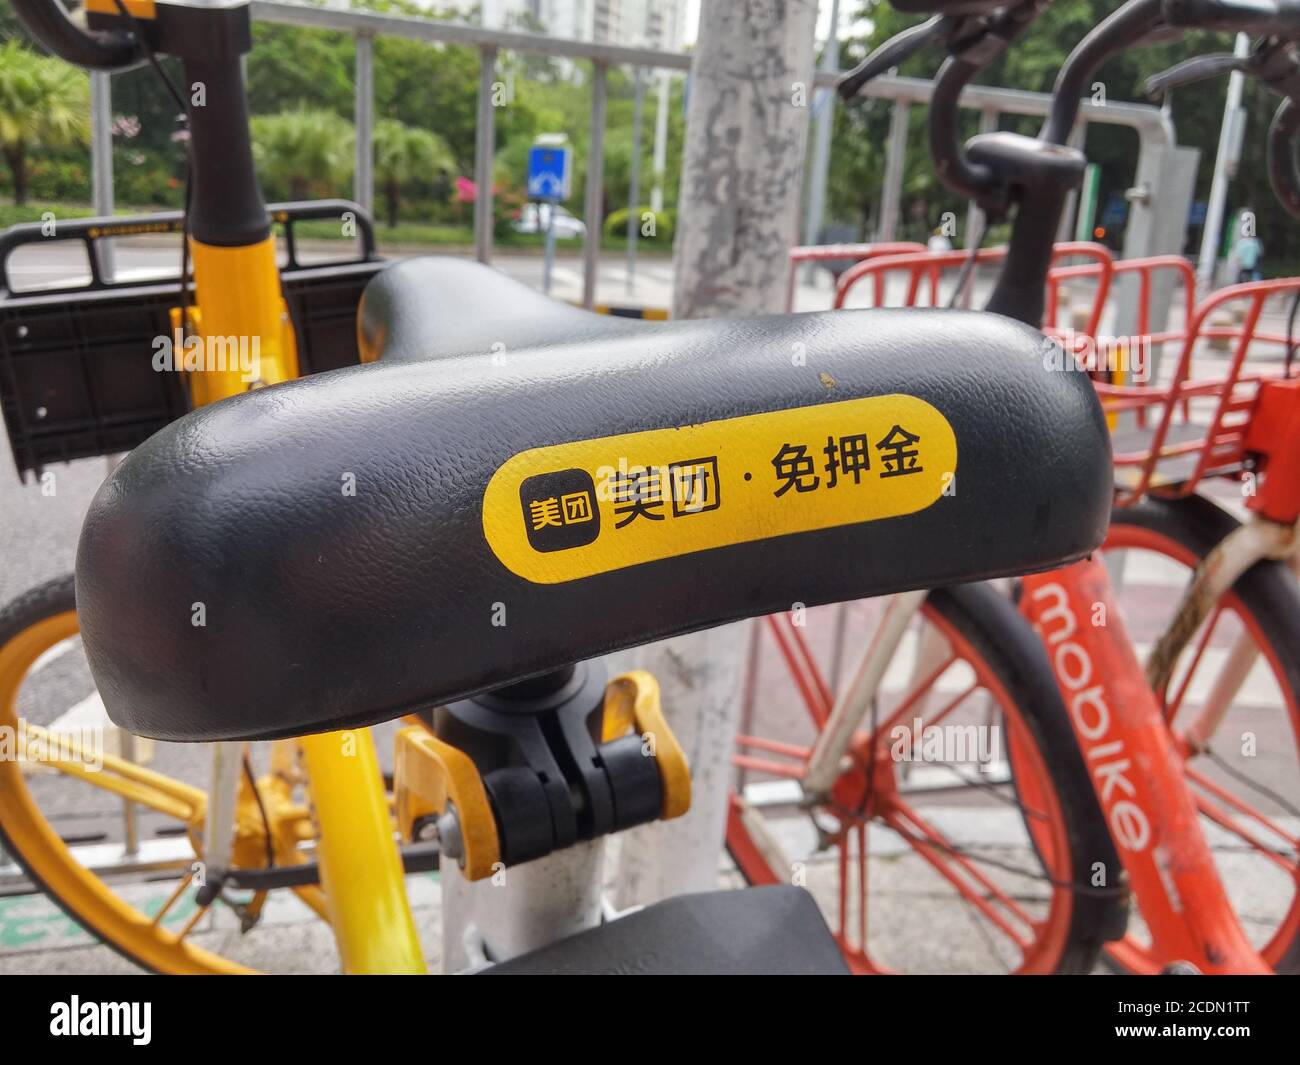 Shenzhen, China: Bicicleta meituana compartiendo en la acera Fotografía de  stock - Alamy